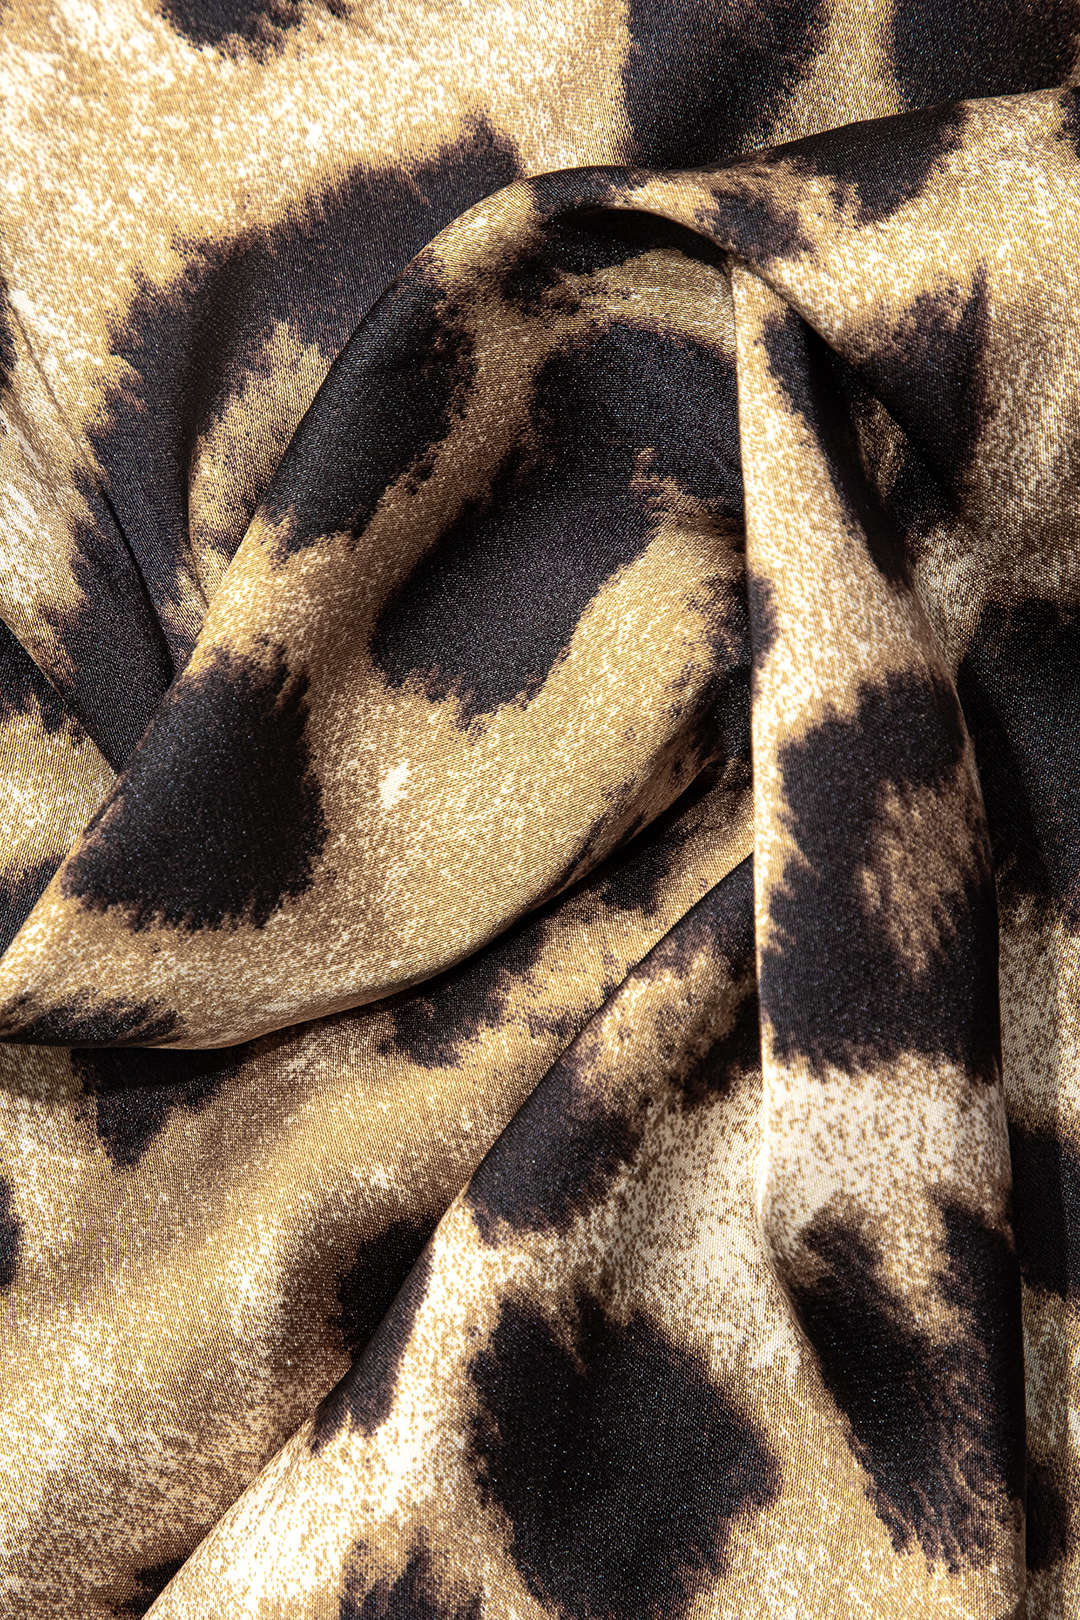 Leopard Print Cross Chain Cowl Neck Slit Slip Maxi Dress